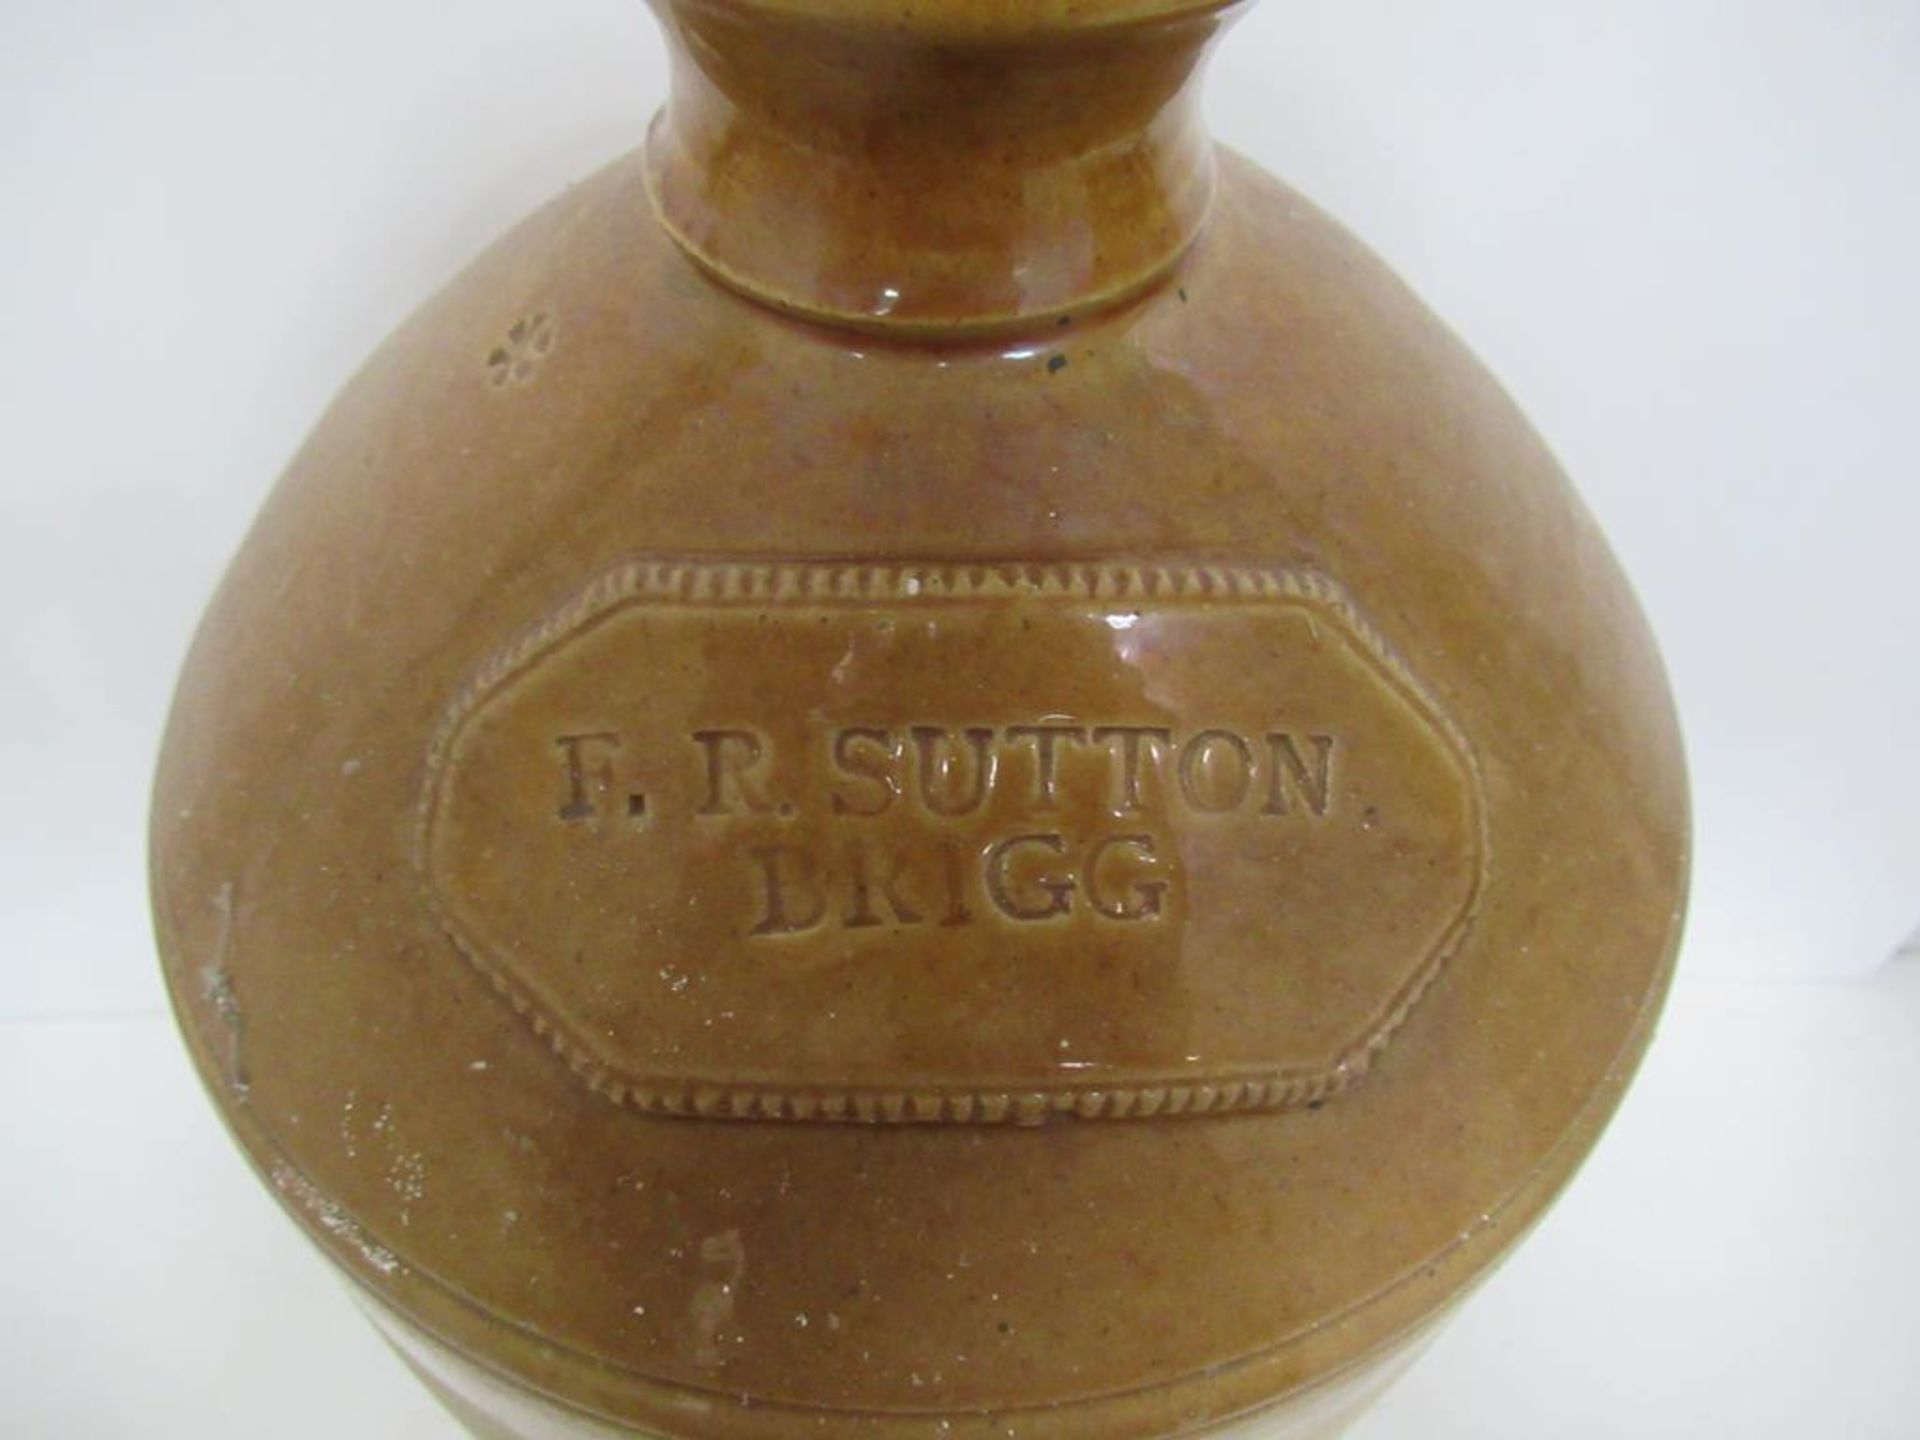 F.R.Sutton Brigg Flagon "missing handle"